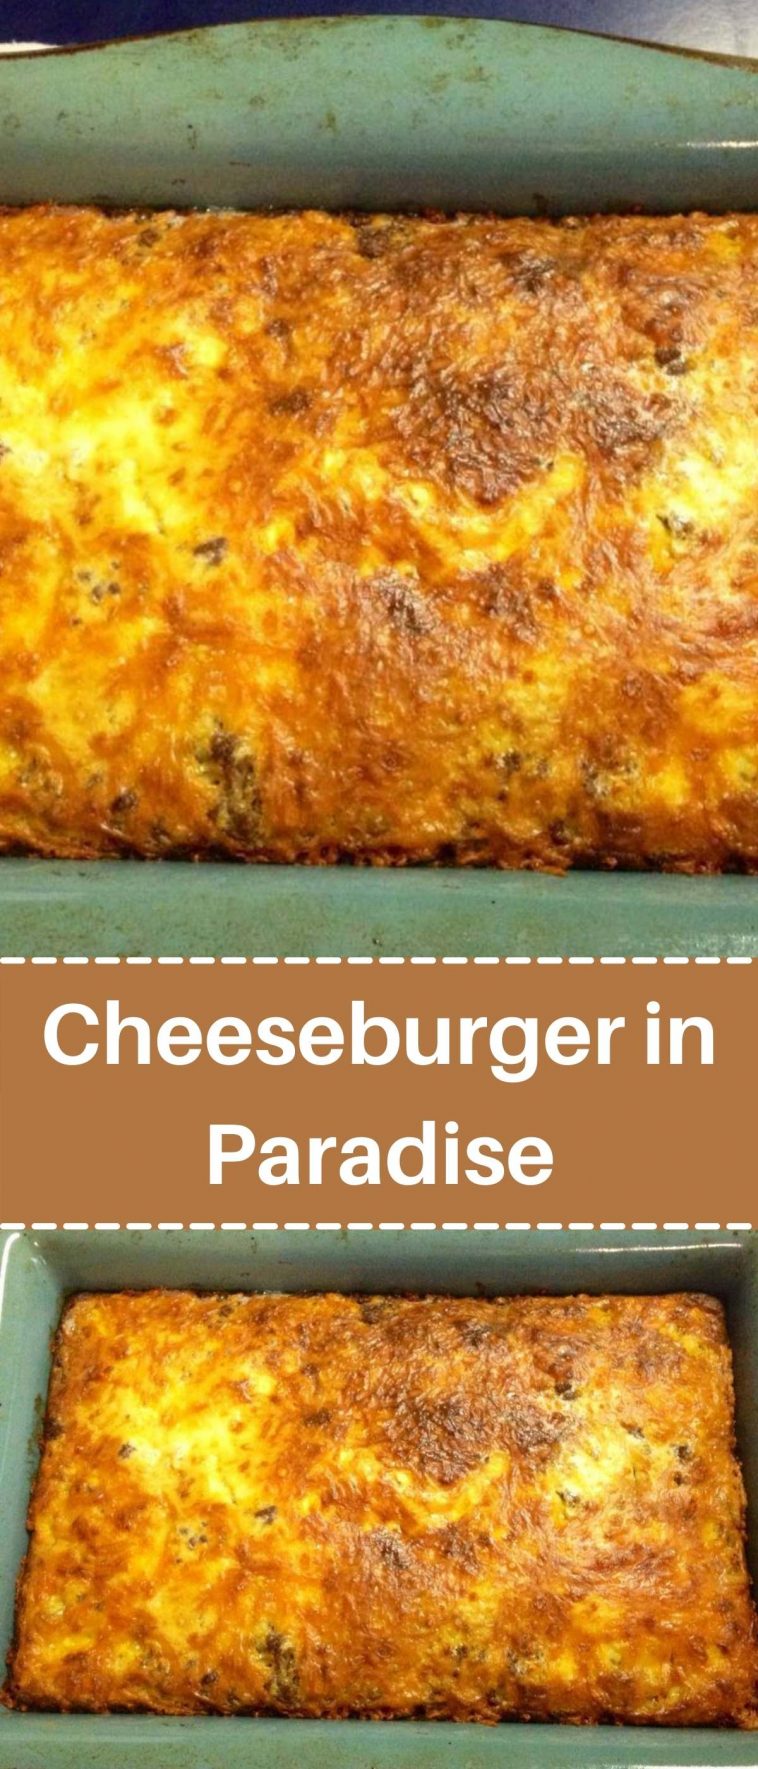 Cheeseburger in Paradise by Jimmy Buffett